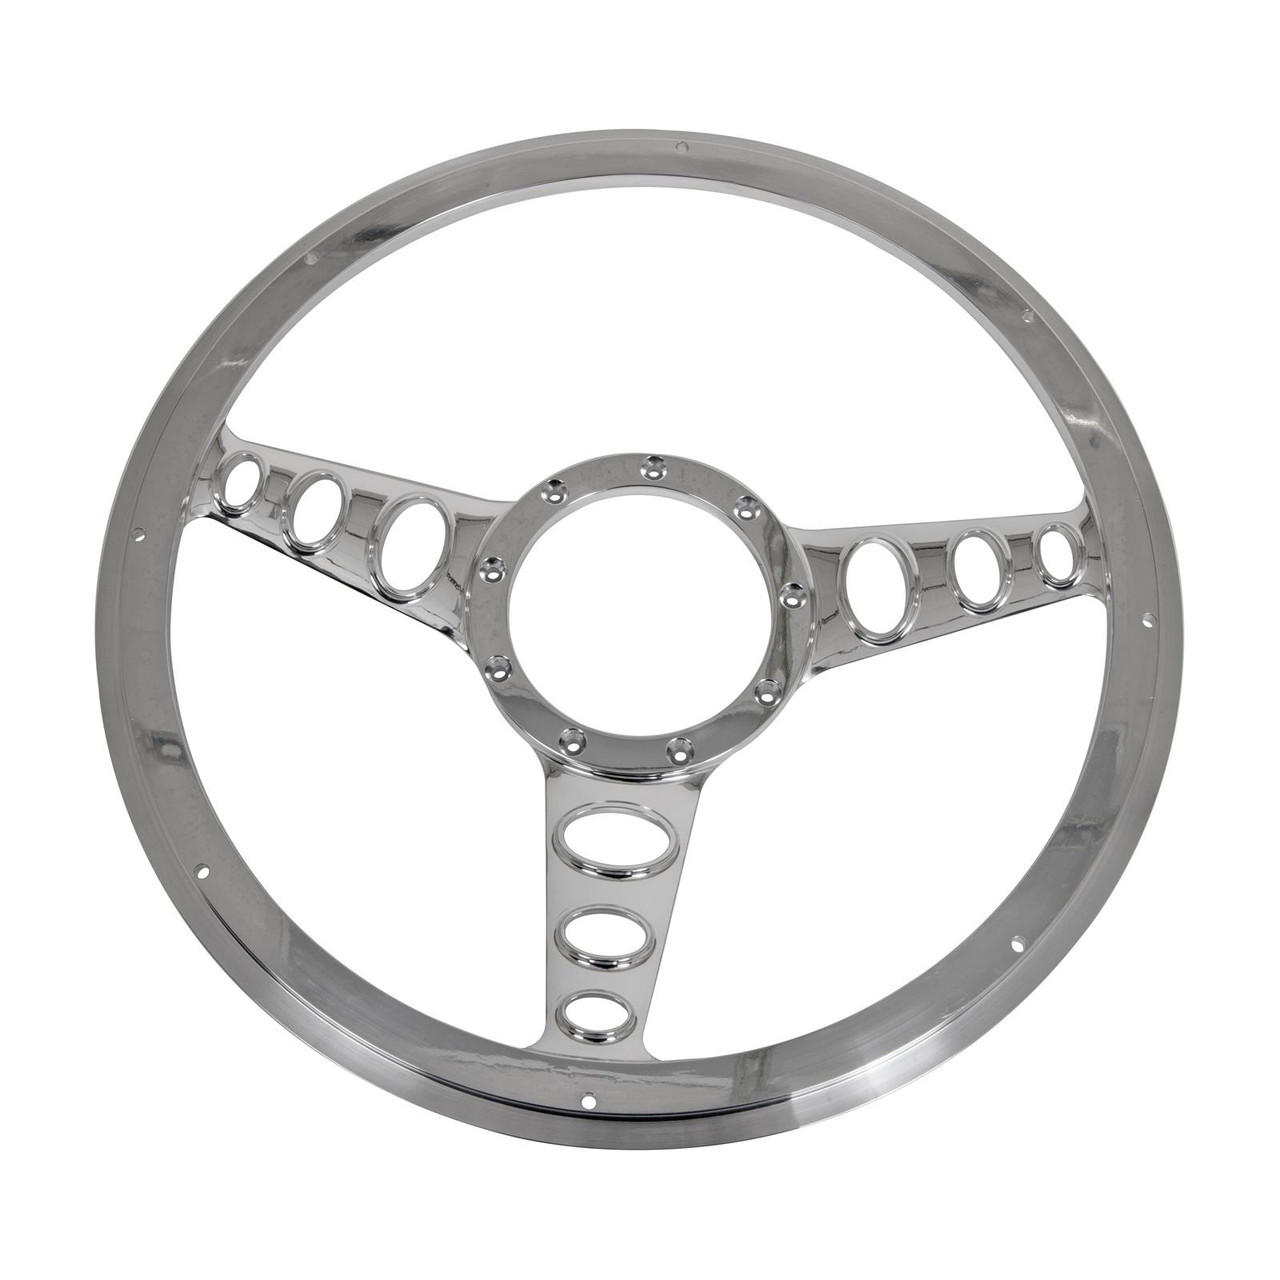 Billet Specialties 14" Outlaw Steering Wheel